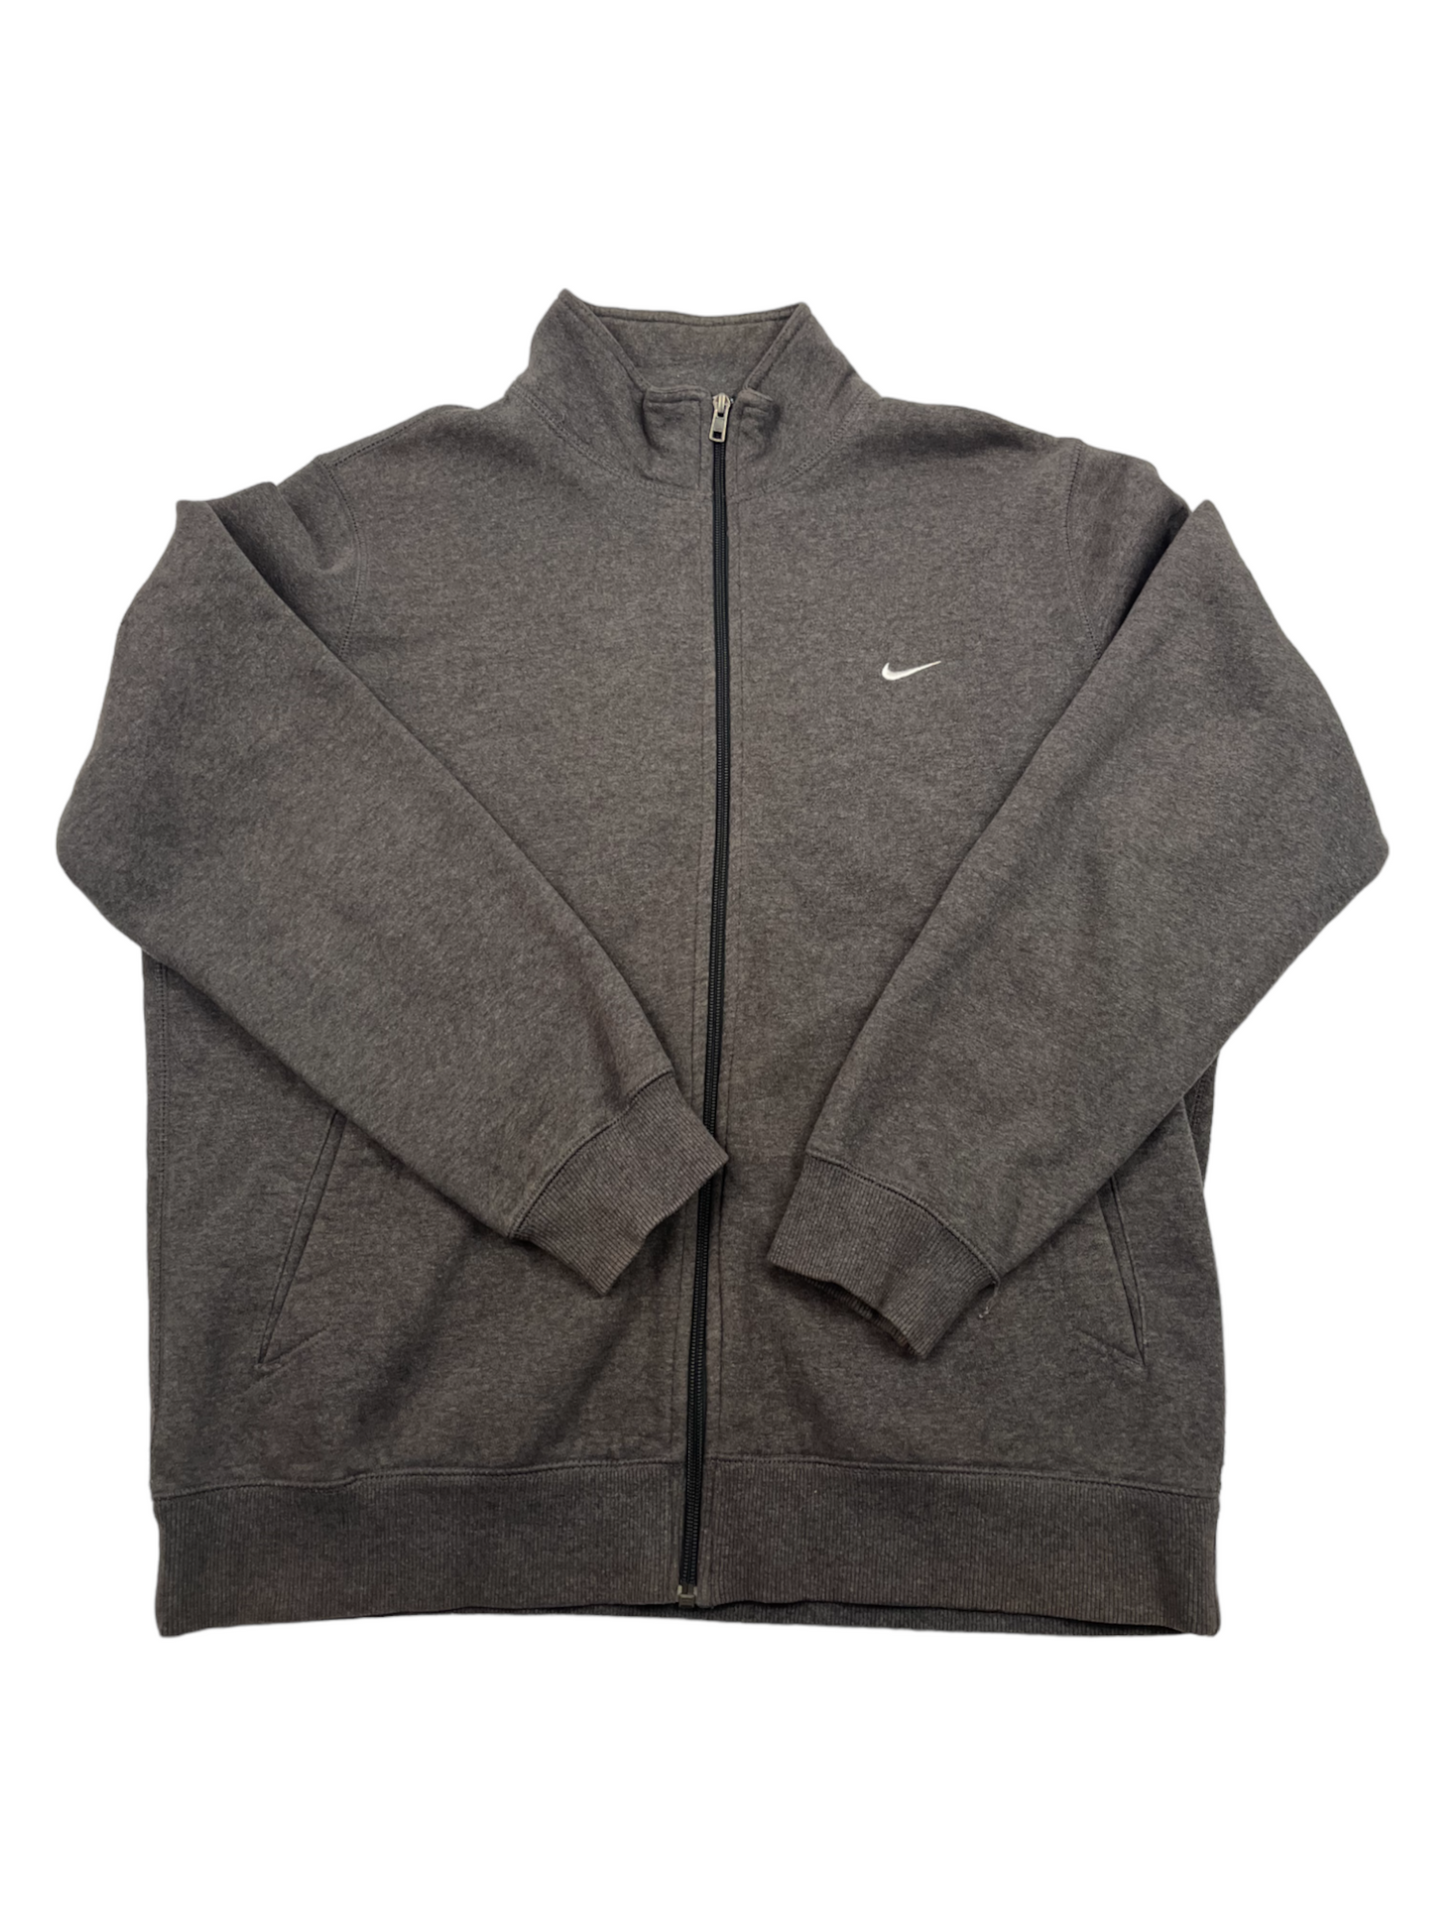 Nike Grey Zip-Up